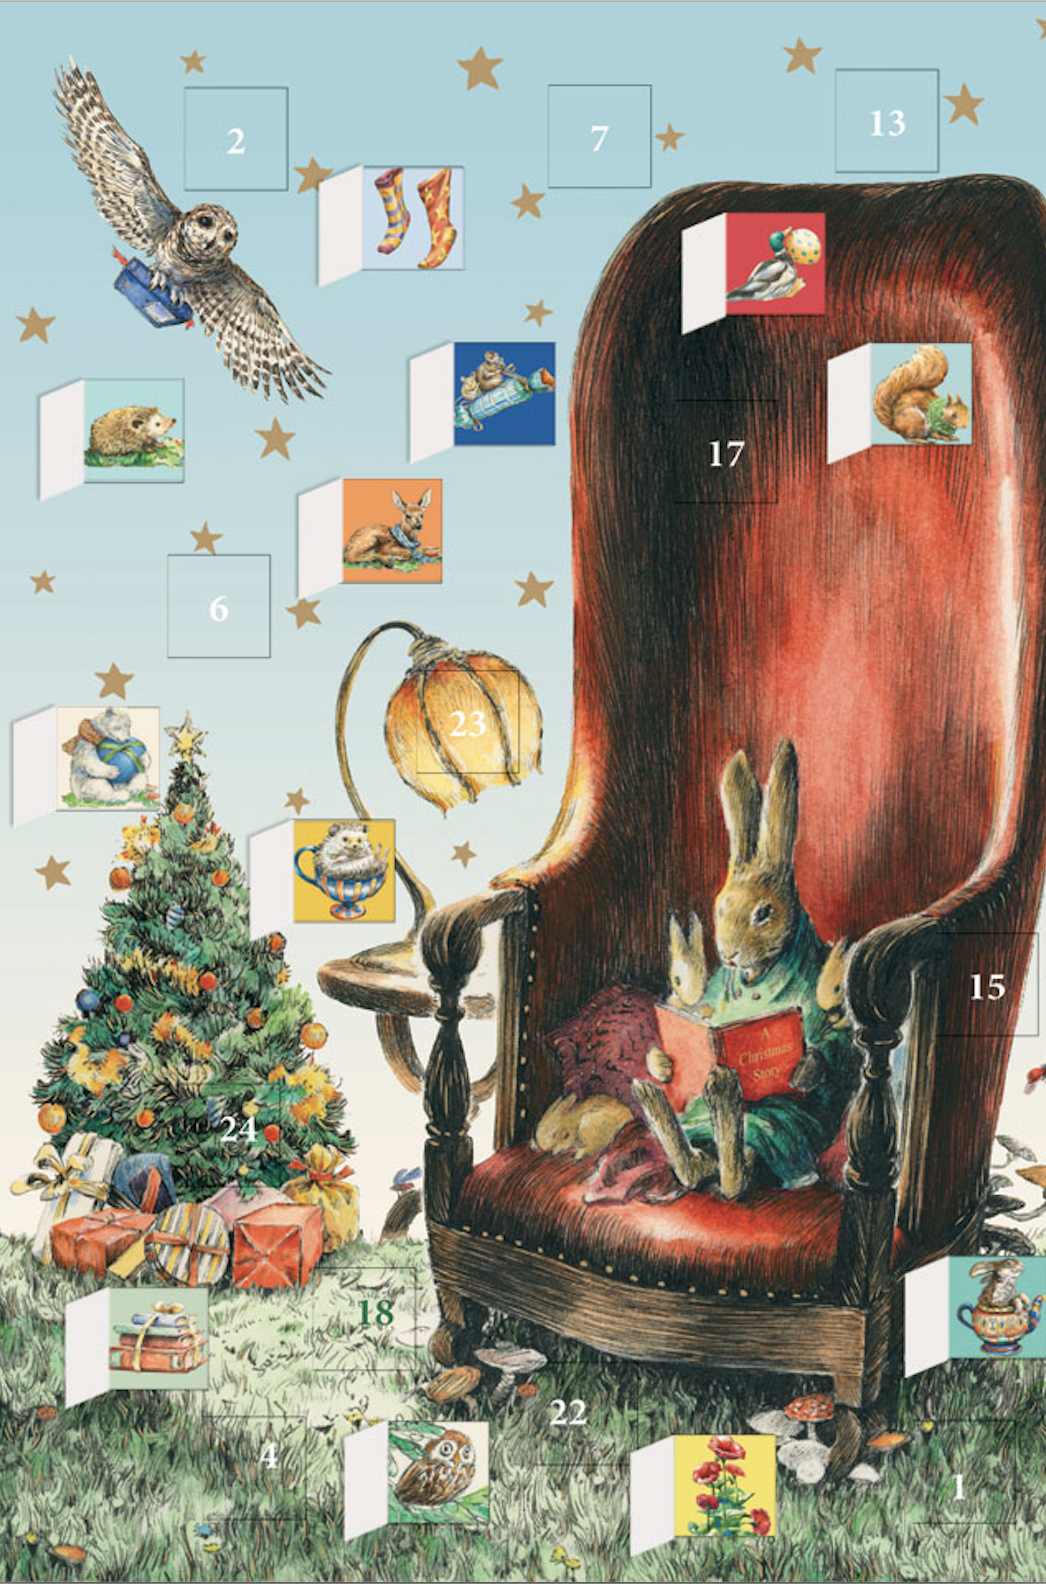 Storytime Advent Calendar Card